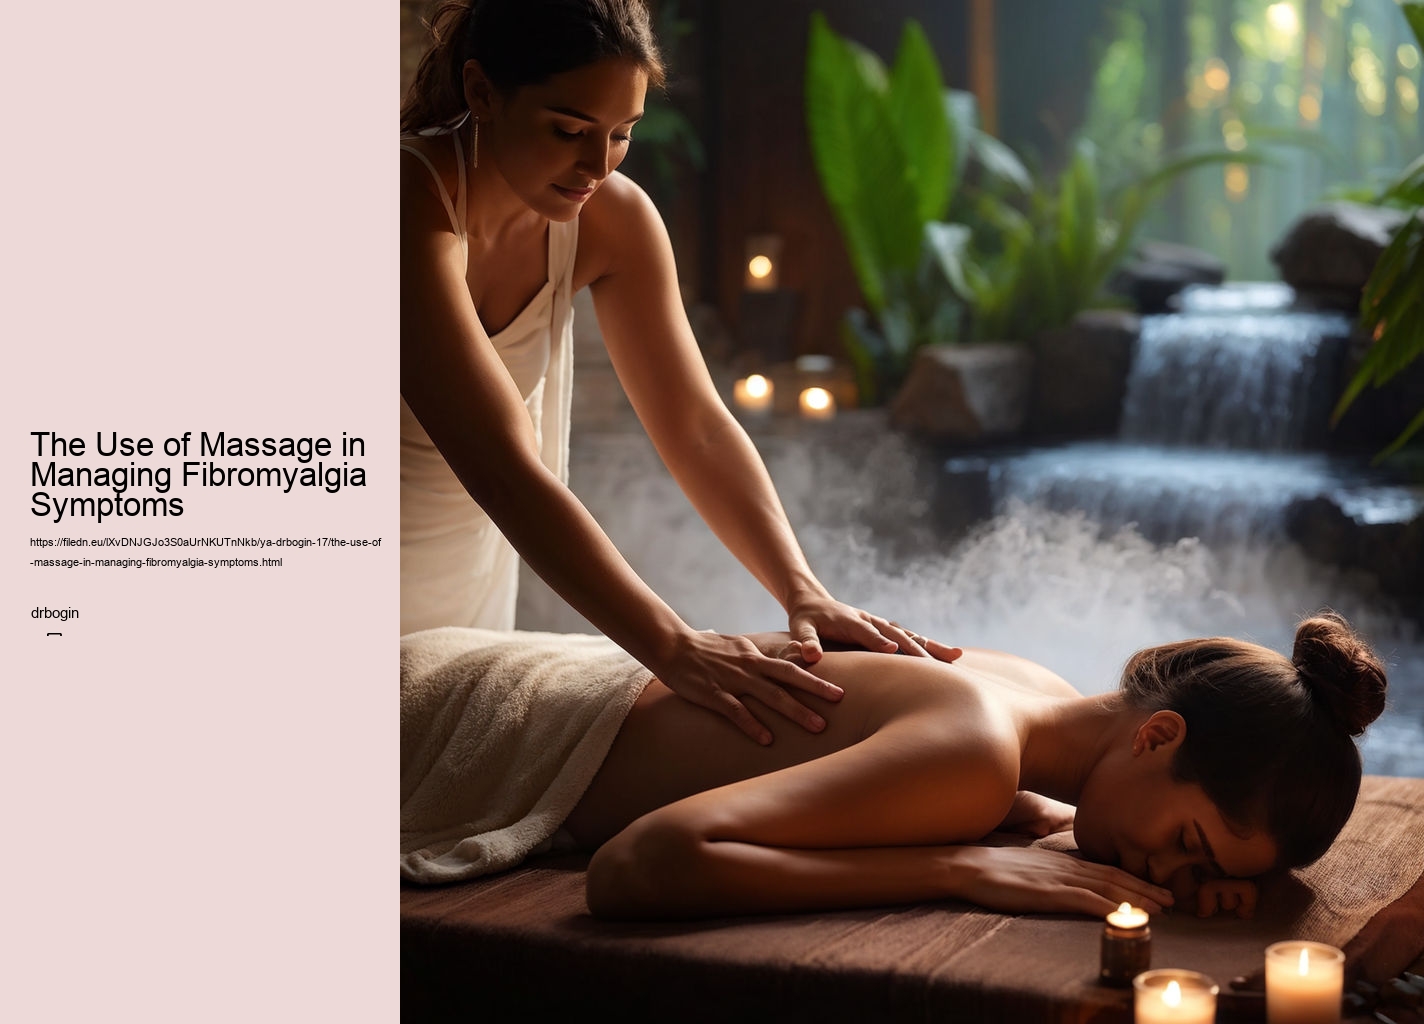 The Use of Massage in Managing Fibromyalgia Symptoms